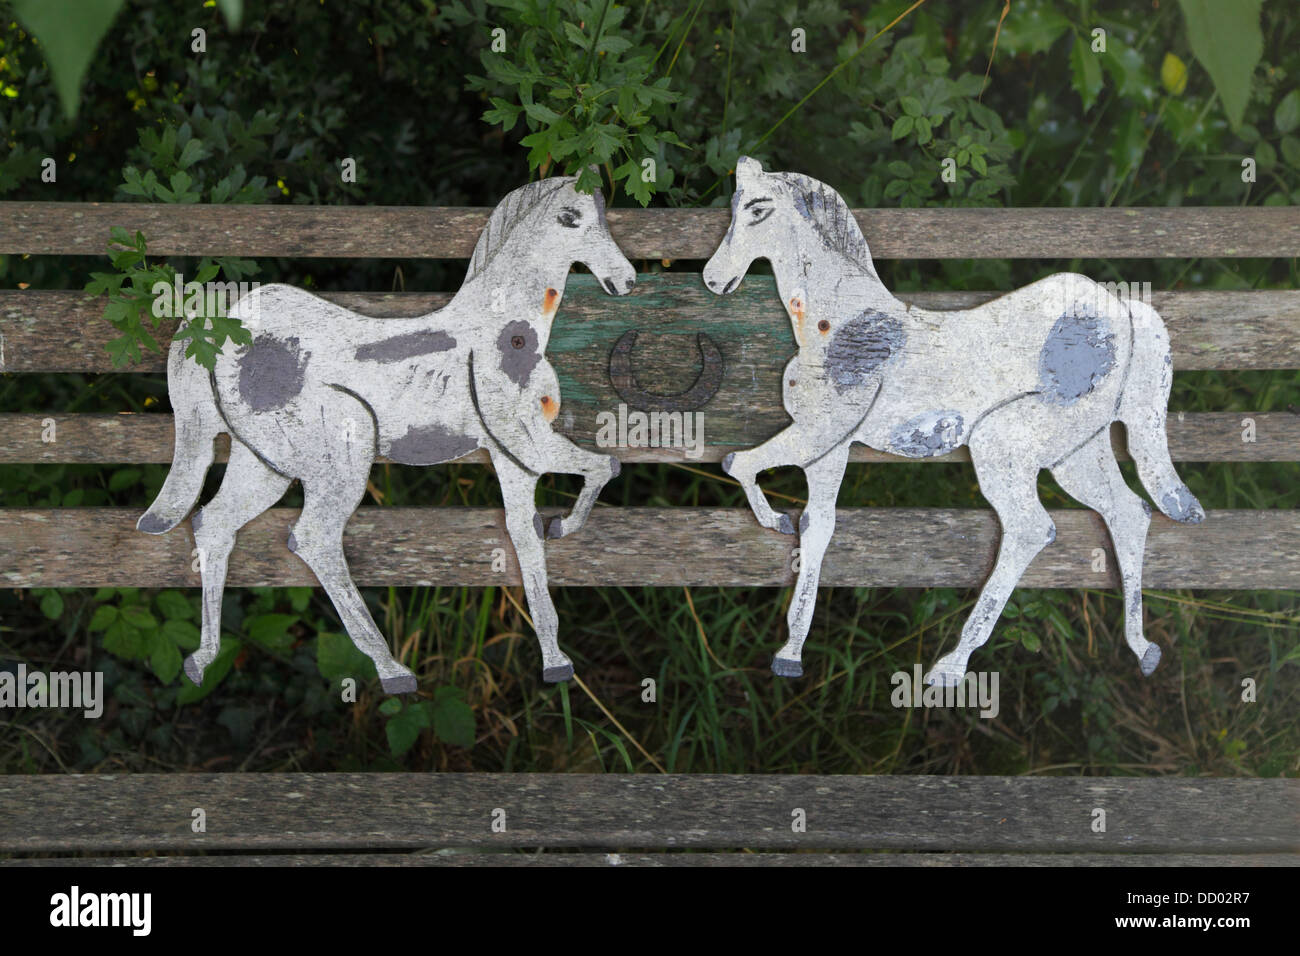 Unusual memorial of horses on a wooden seat in Biddenden churchyard Kent UK GB Stock Photo